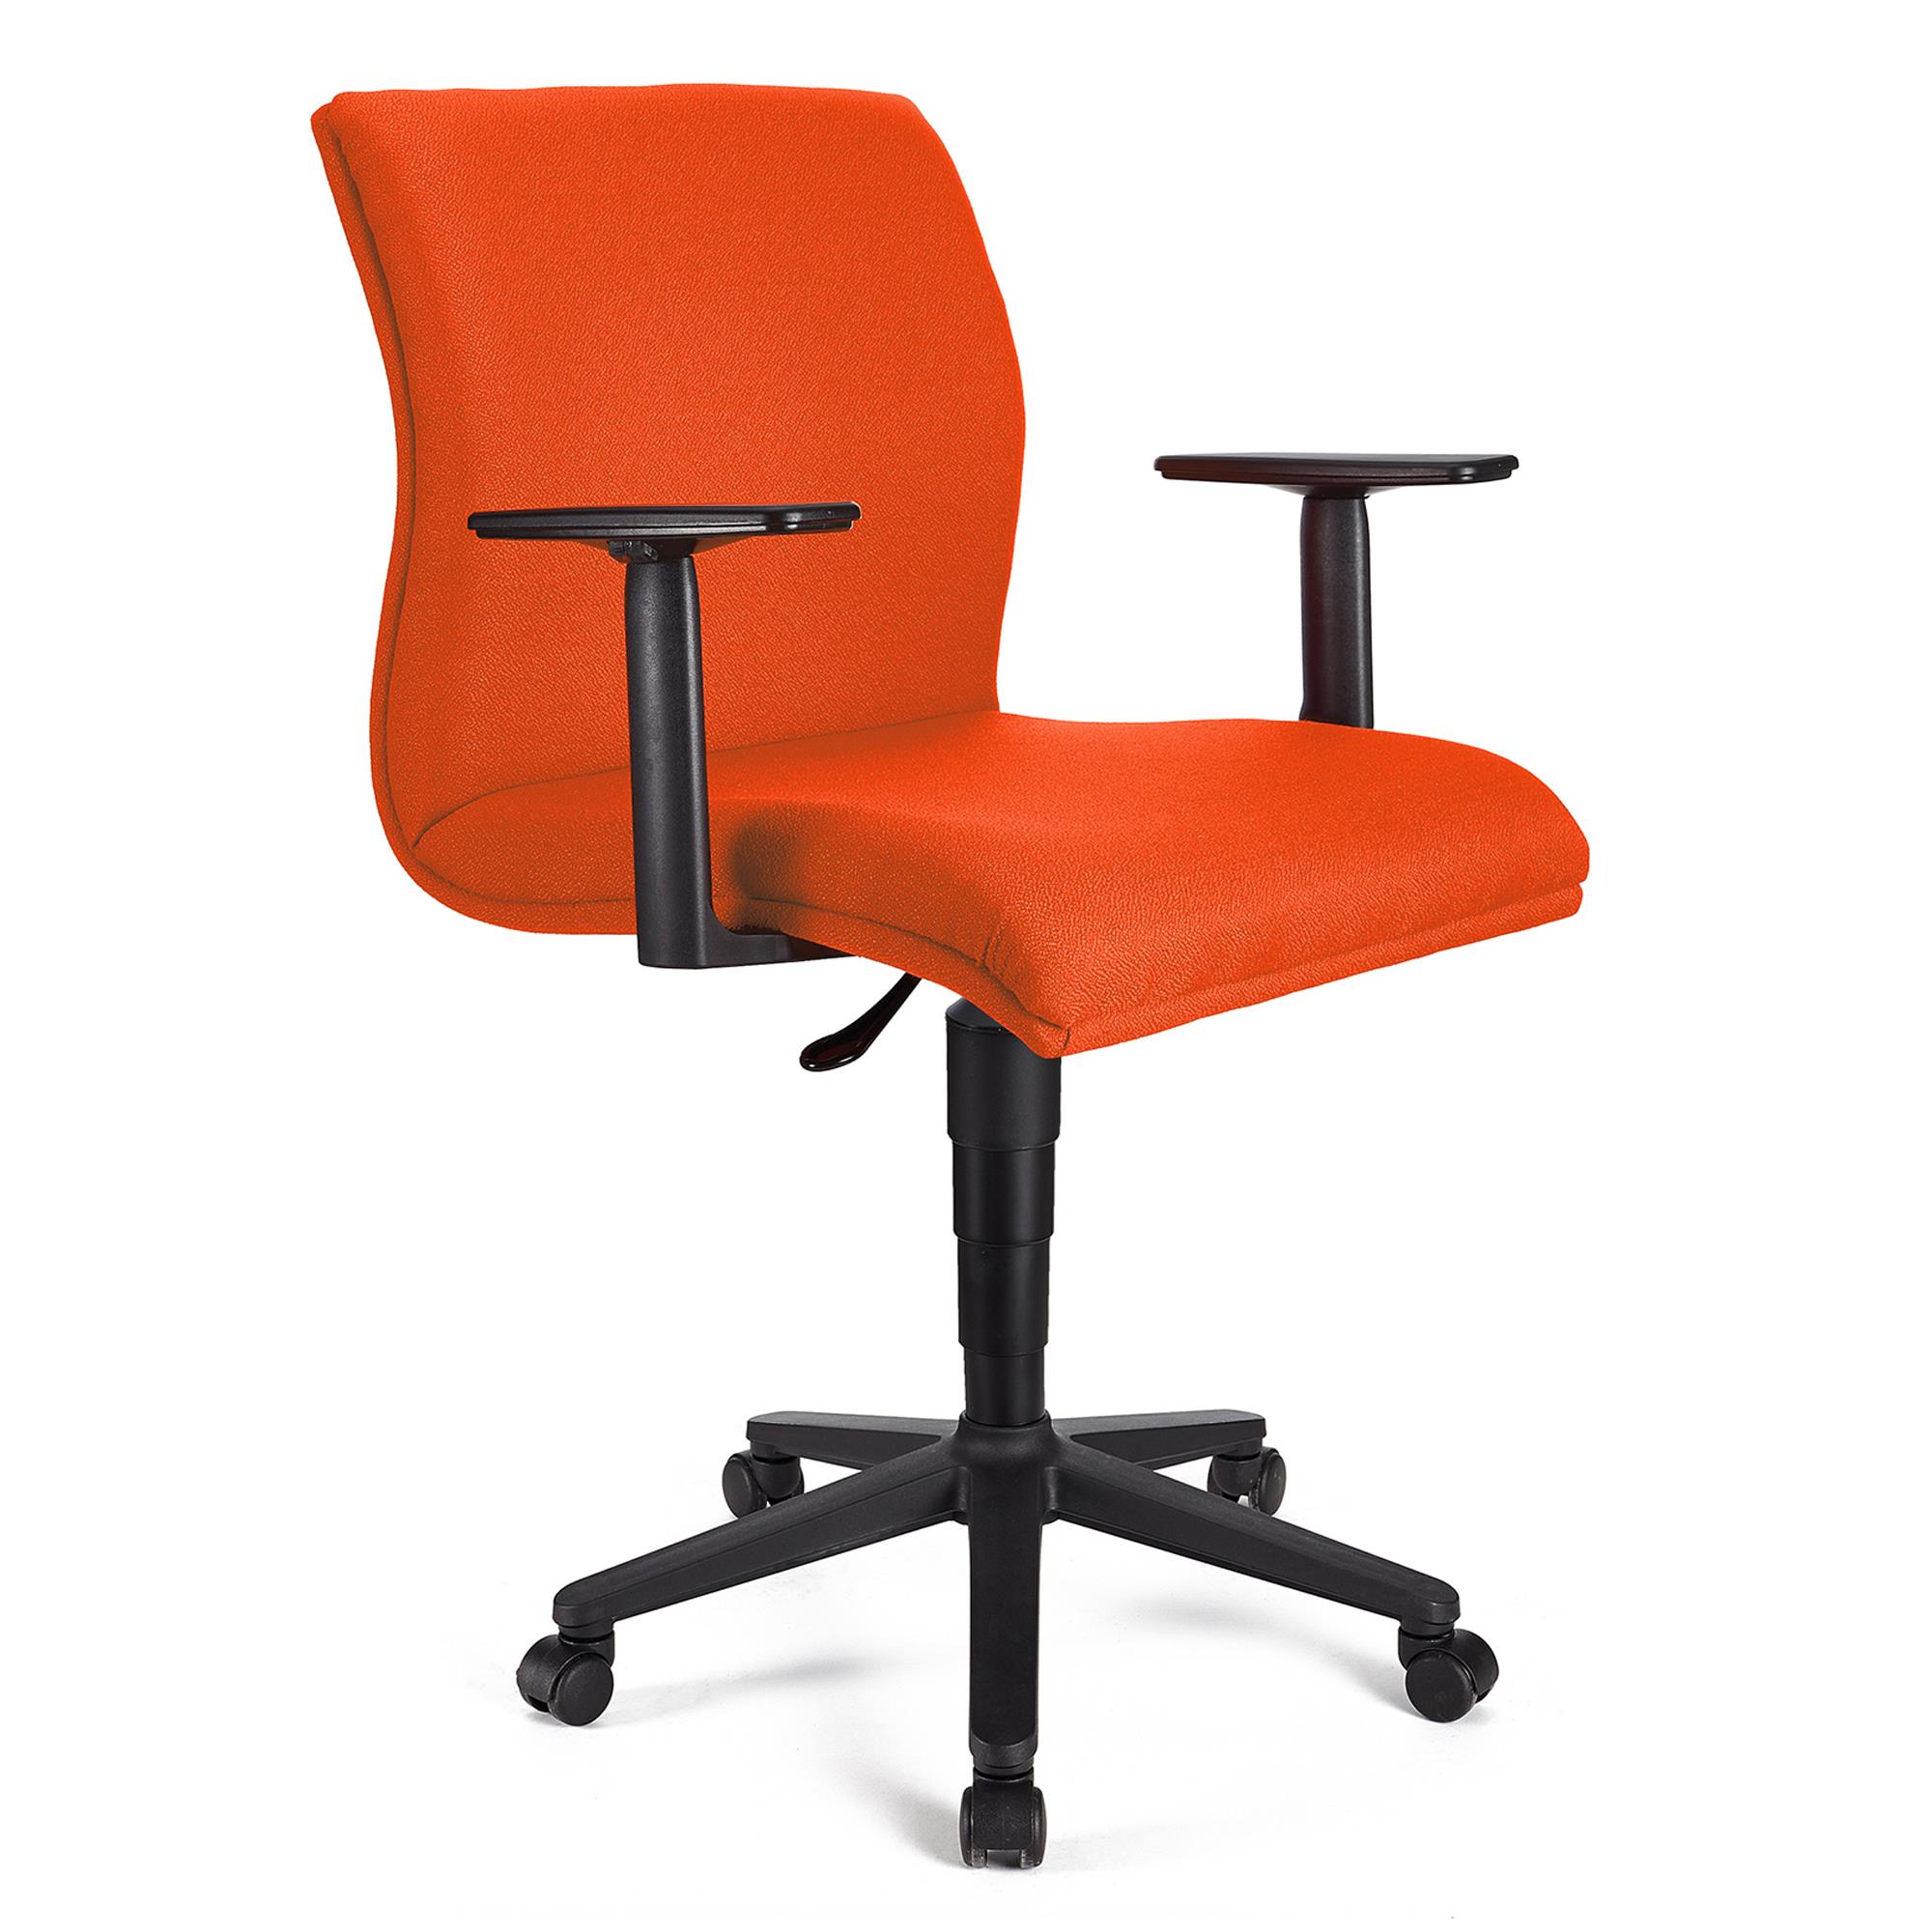 Bürostuhl HANNIBAL BASIS STOFF, verstellbare Armlehnen, dicke Polsterung, Farbe Orange